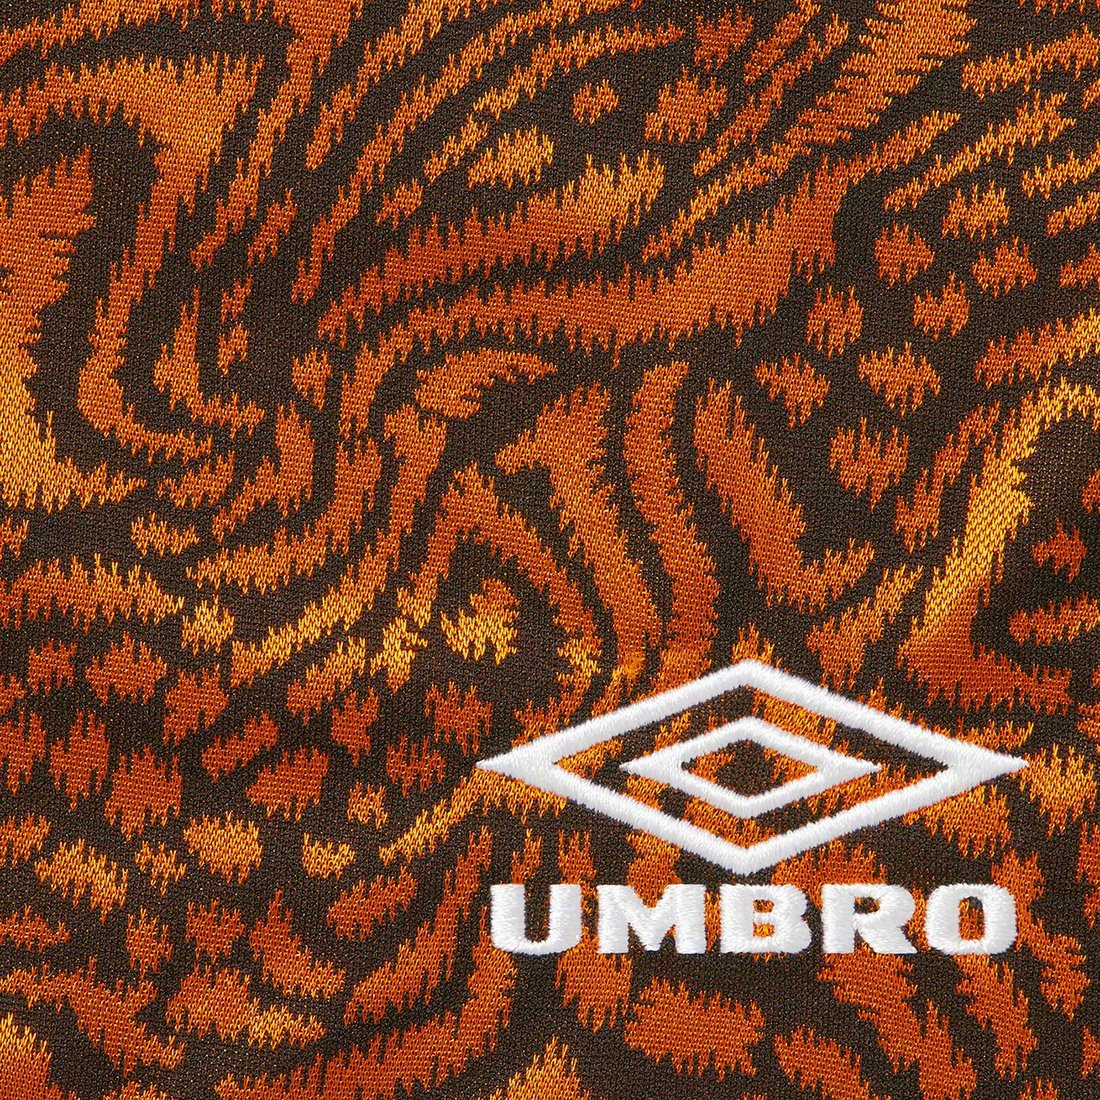 Details on Supreme Umbro Jacquard Animal Print Soccer Short Orange from spring summer 2023 (Price is $110)